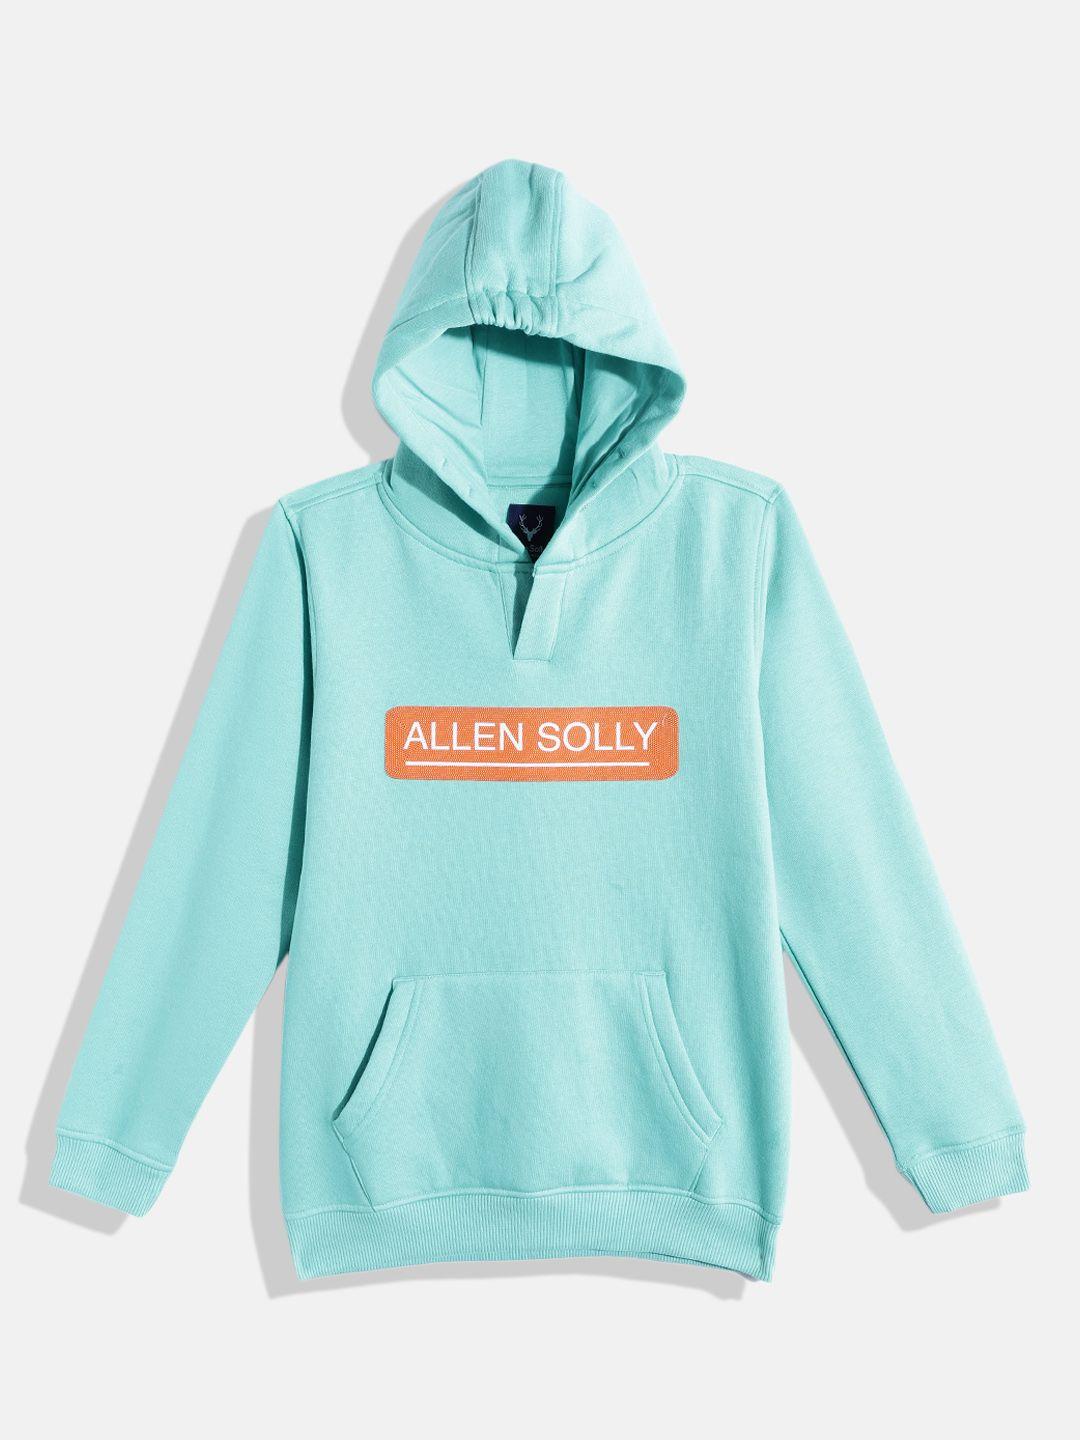 allen solly junior boys turquoise blue brand logo print hooded sweatshirt